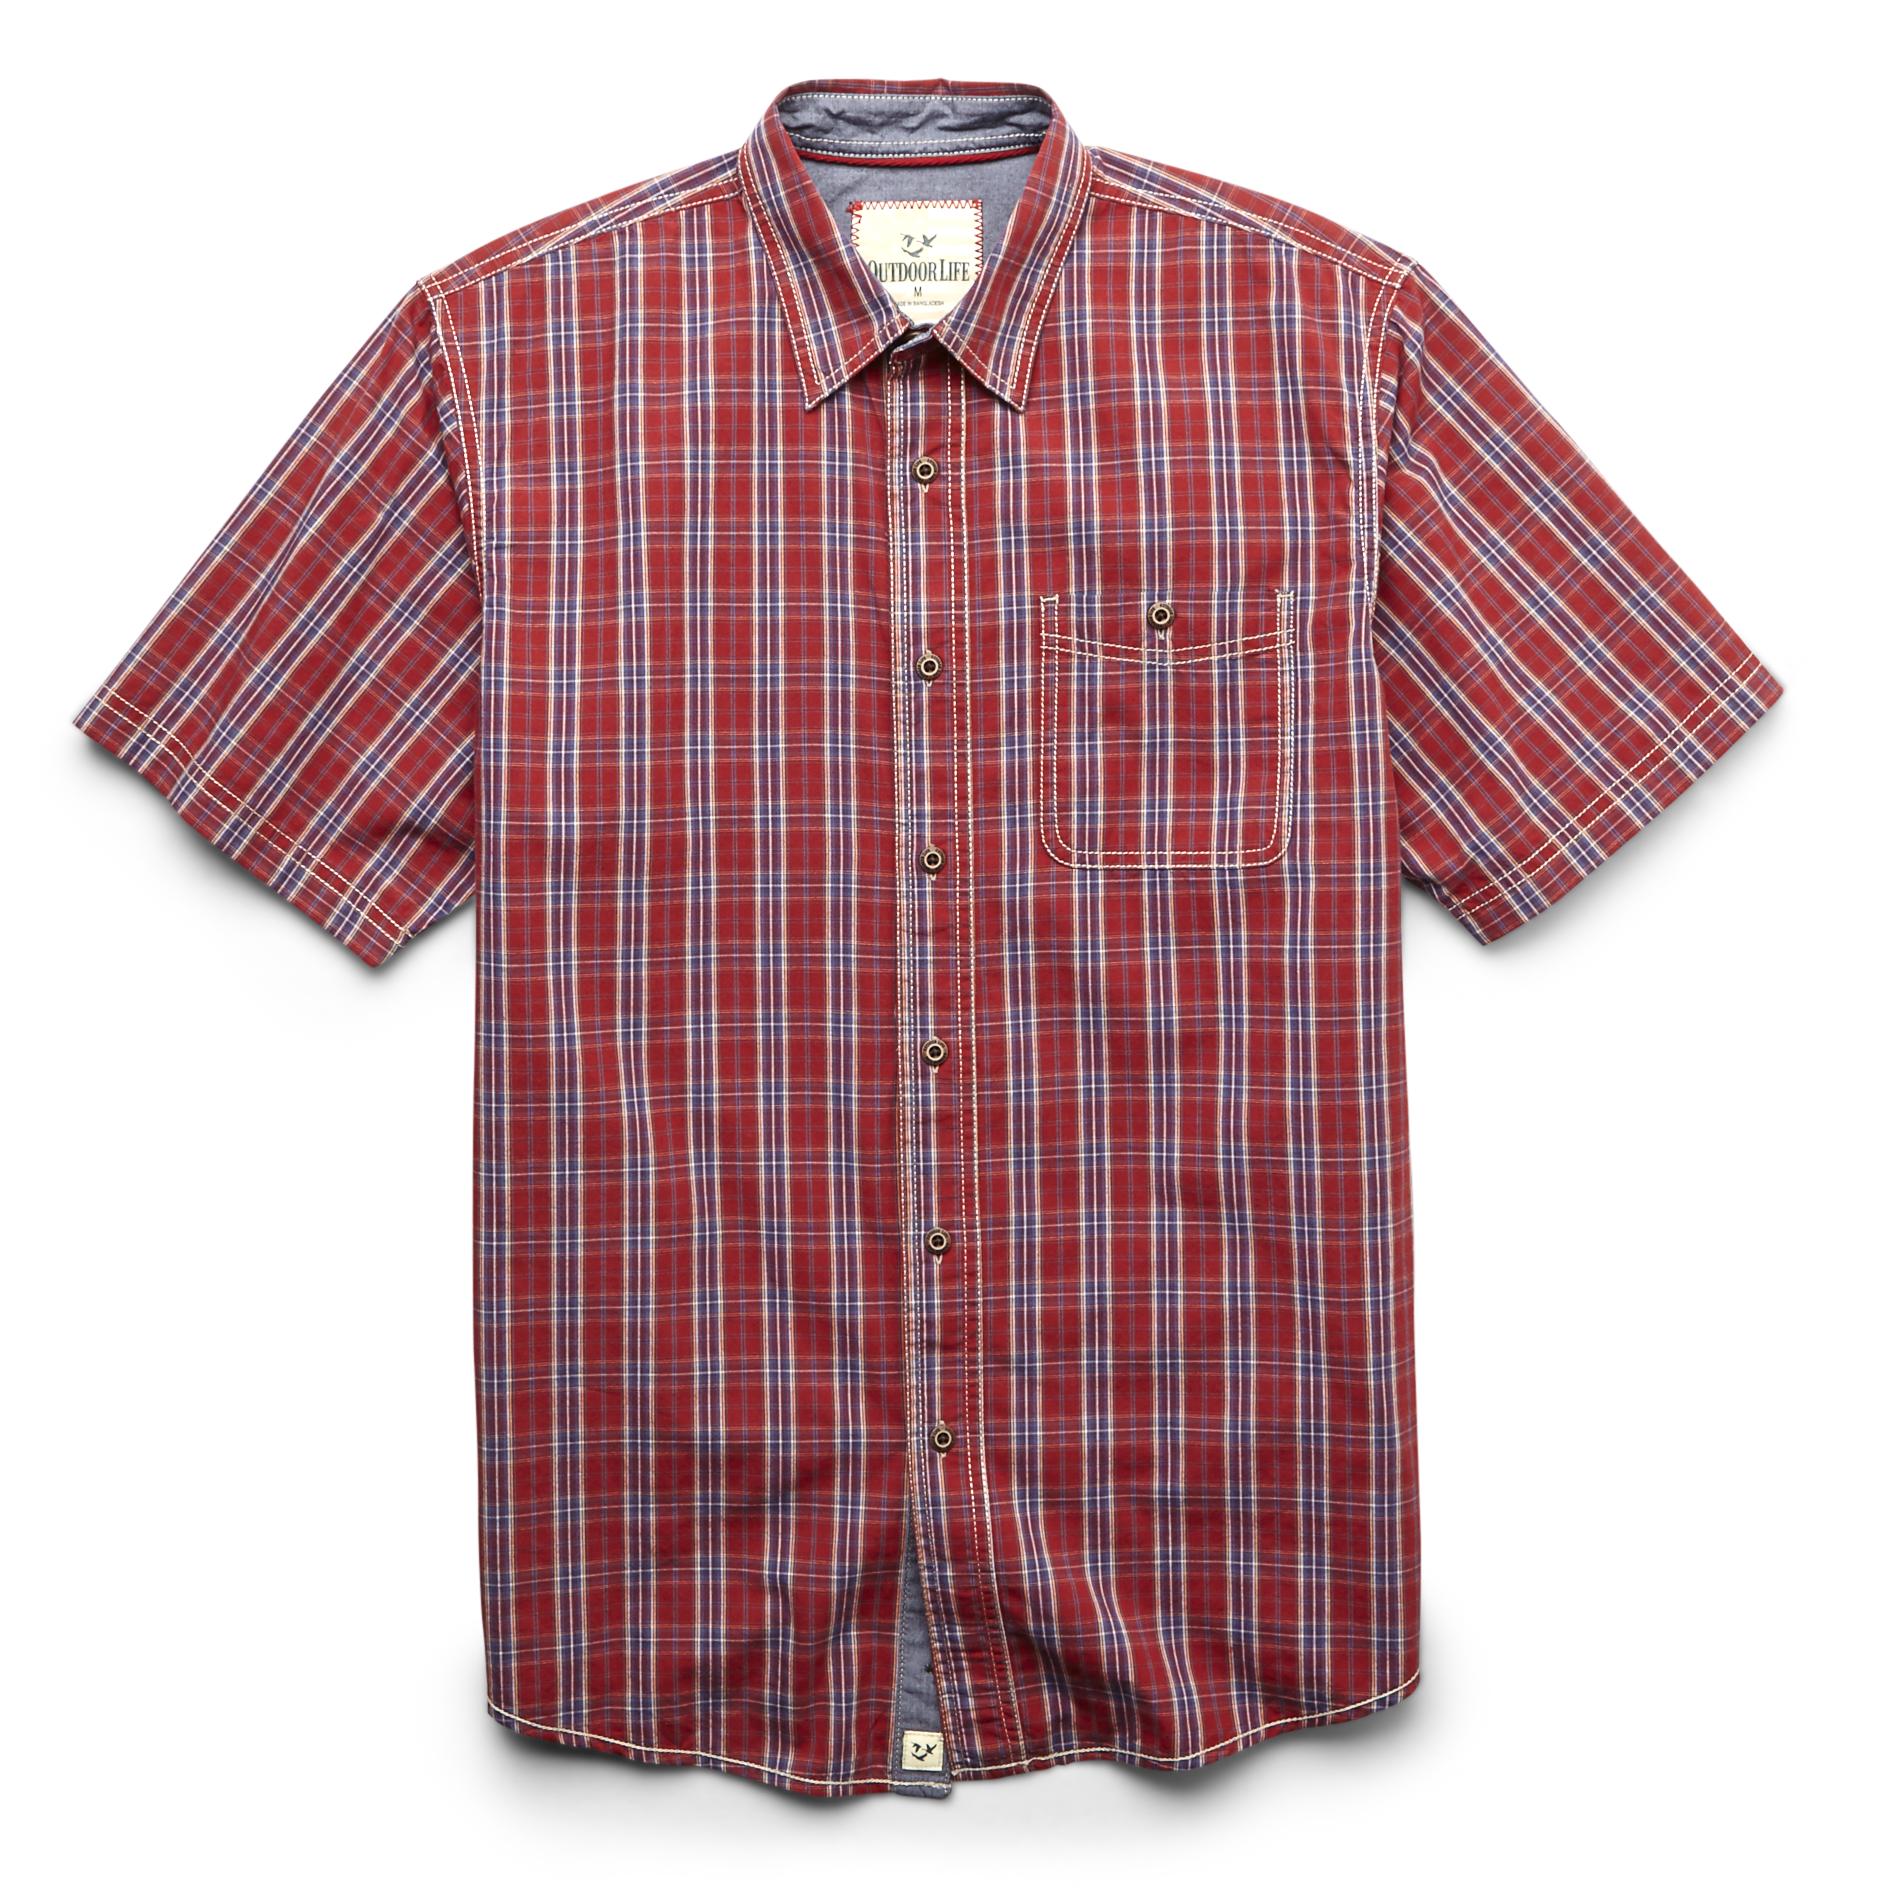 Outdoor Life&reg; Men's Short Sleeve Shirt - Plaid